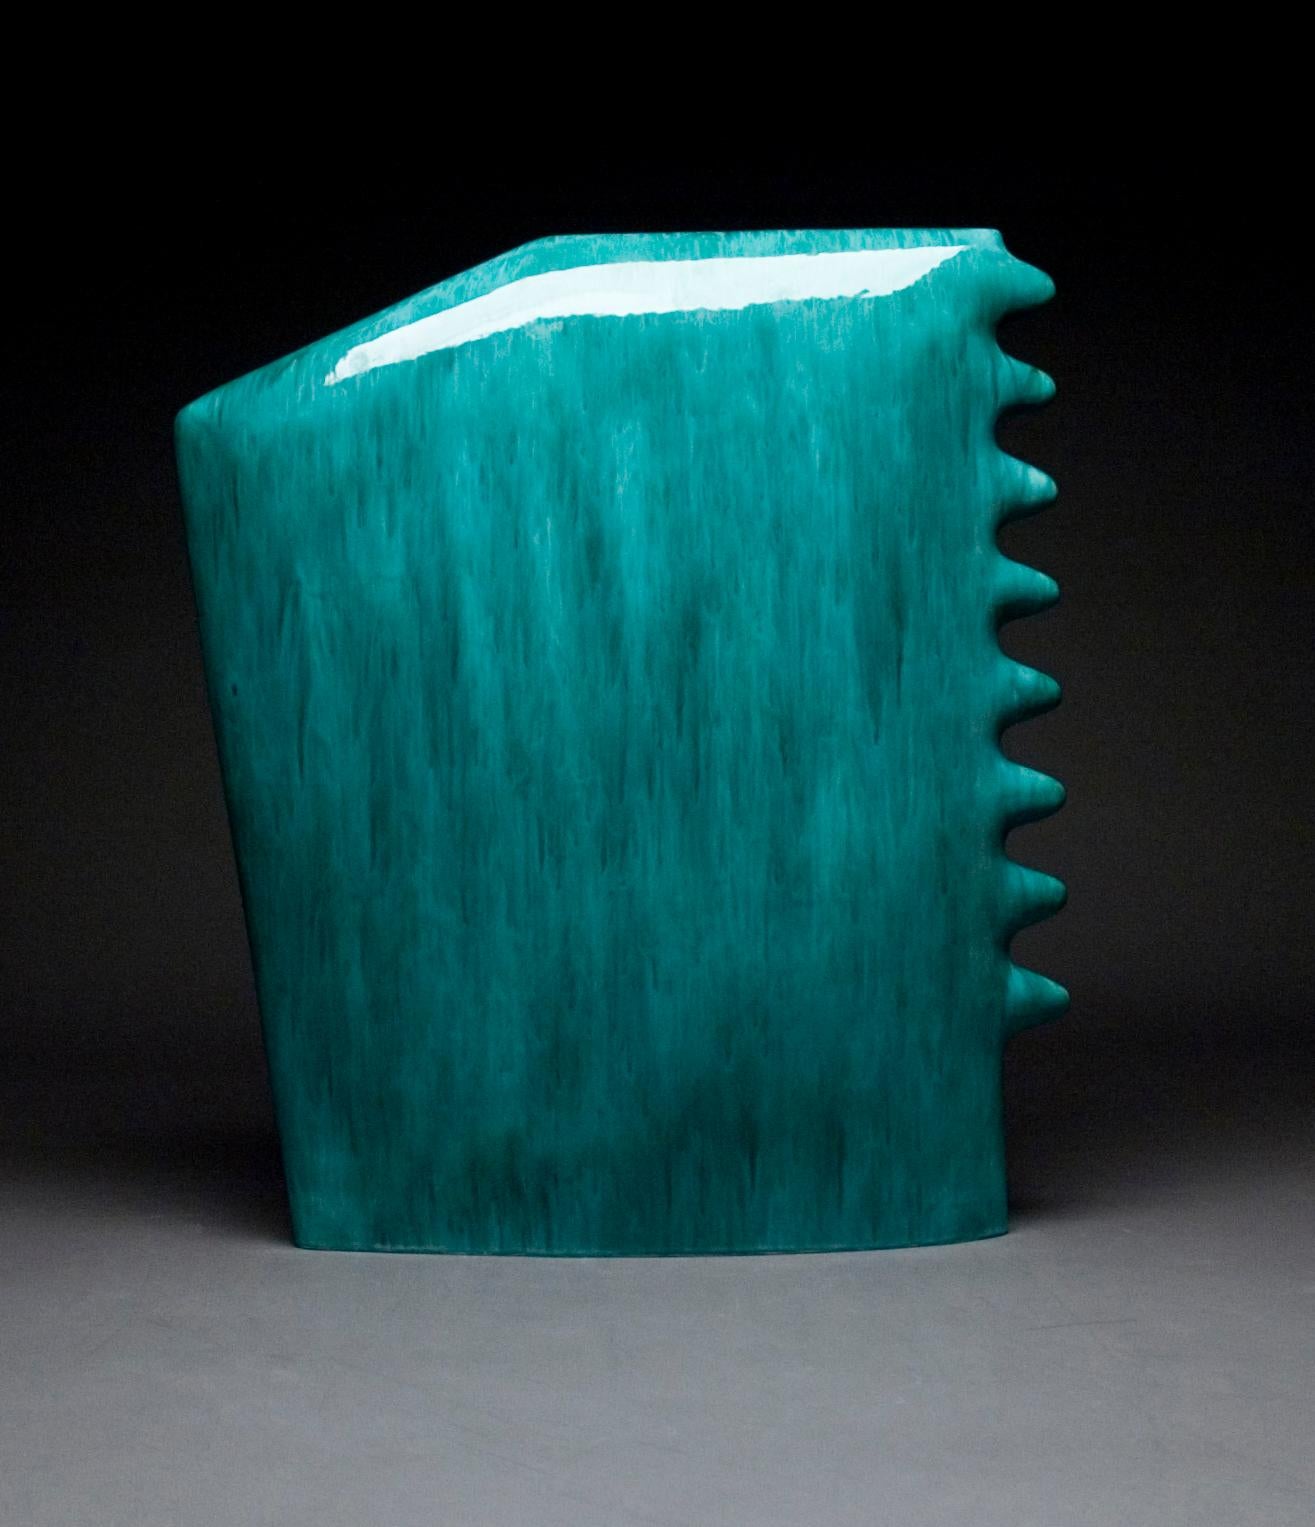 James Marshall Abstract Sculpture - "Blue 270", Minimalist Ceramic Sculpture, Glazed, Liminal Form